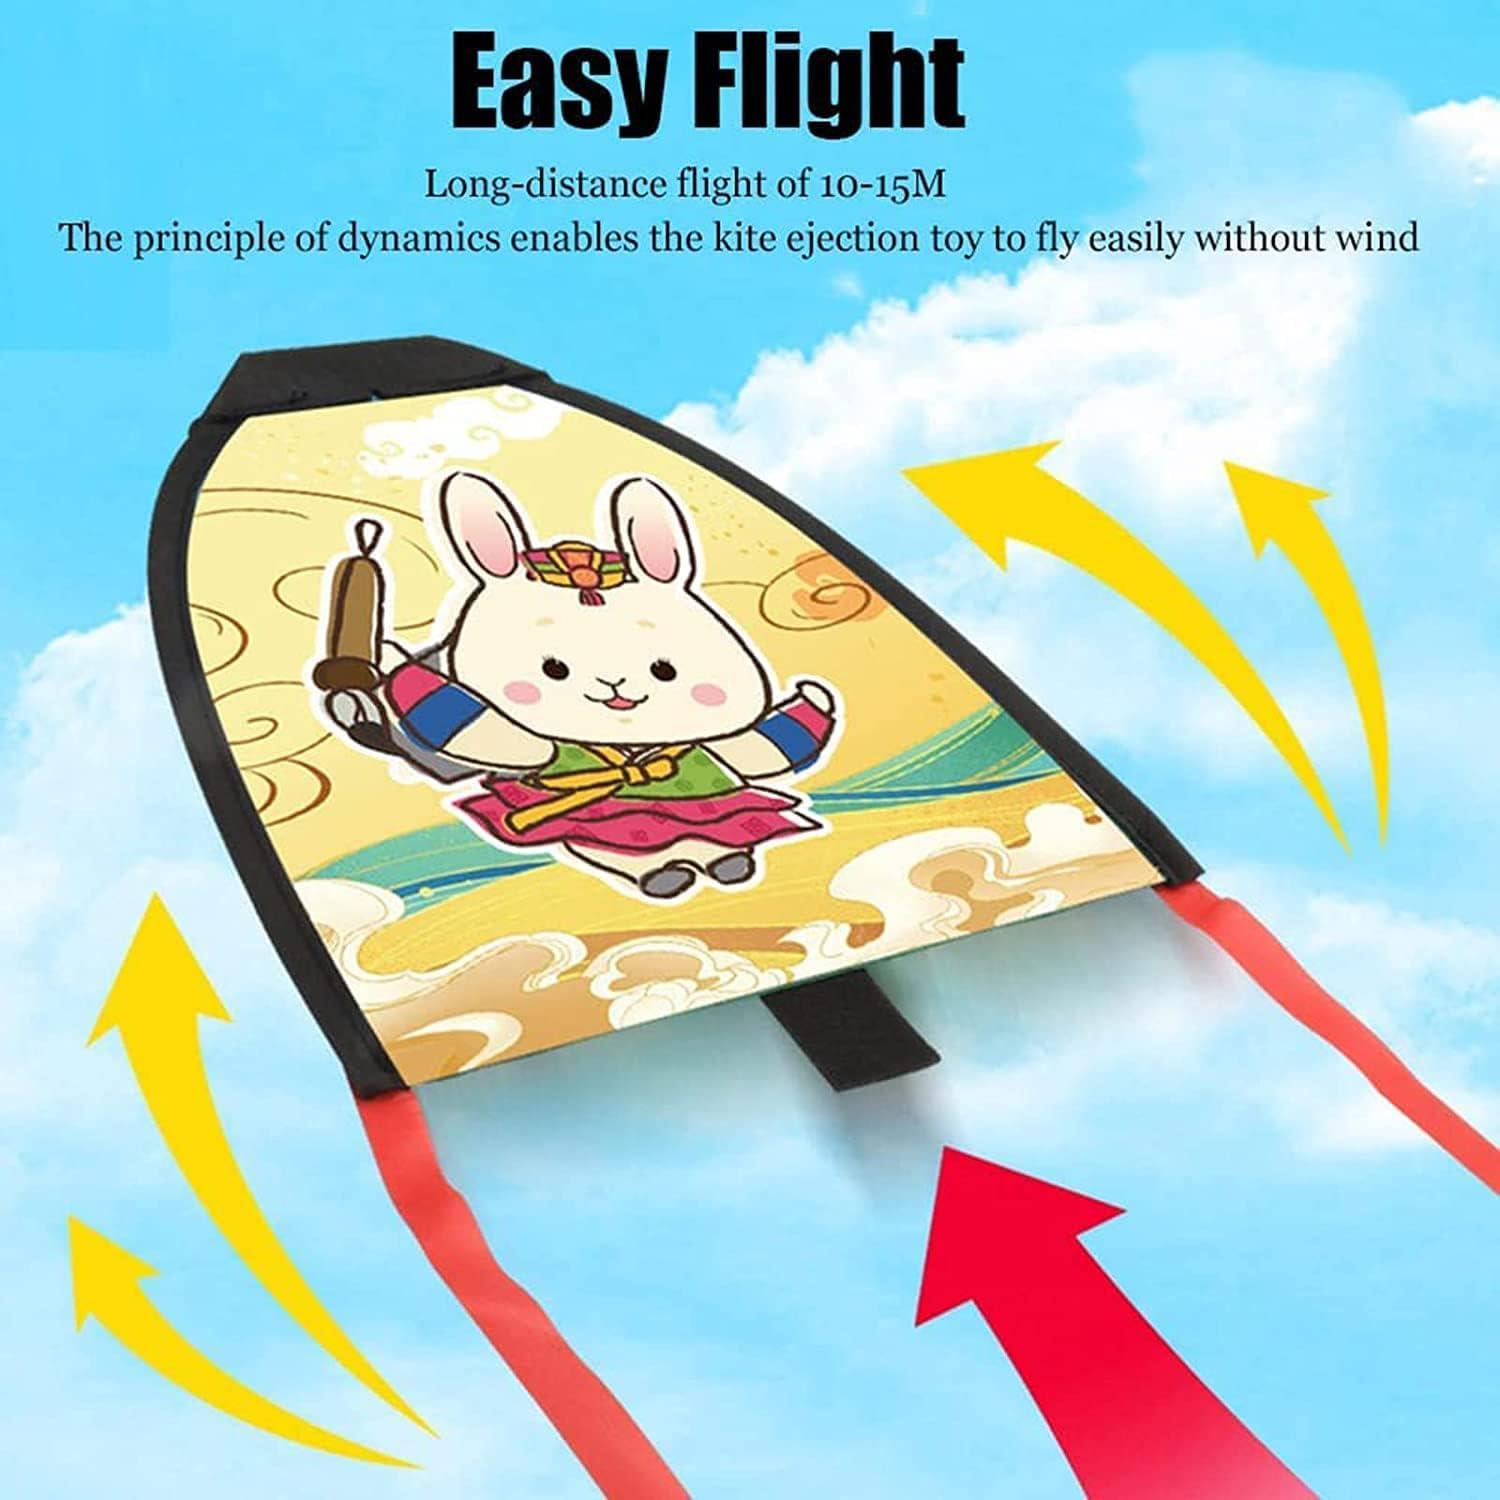 Kids Kite Catapult Toy Catapult Kite Launcher Outdoor Flight